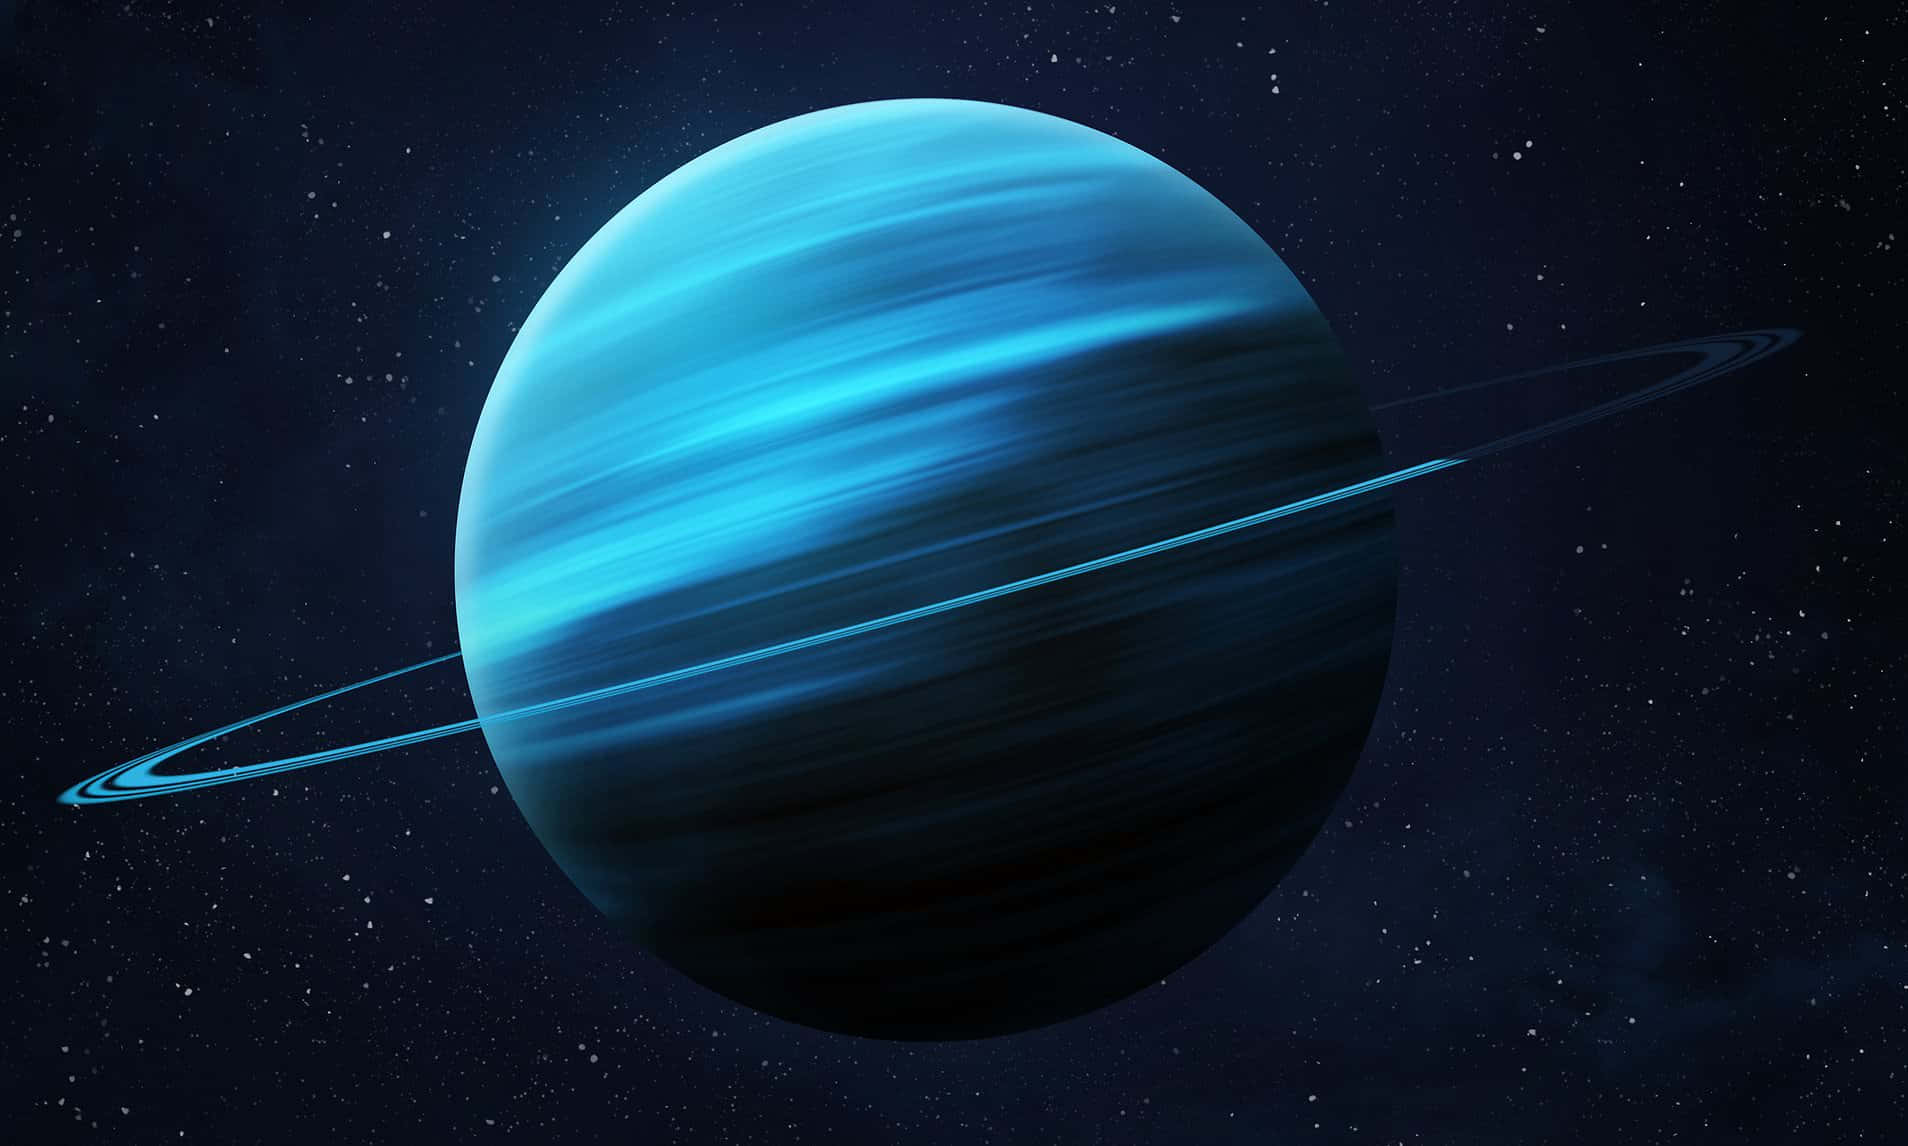 Stunning view of Uranus in the vastness of space